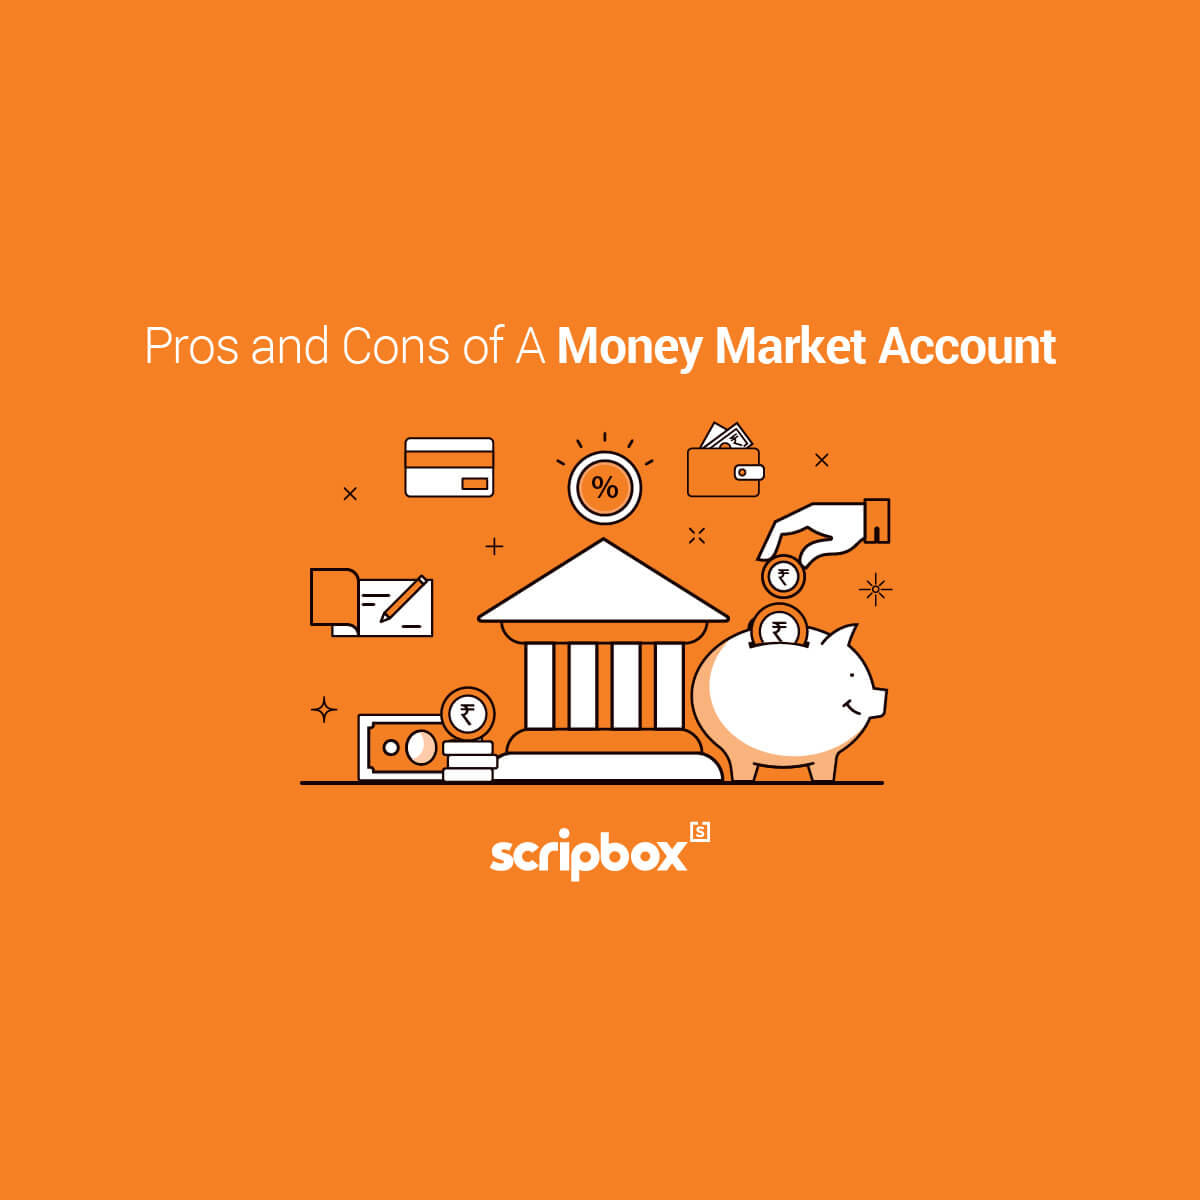 money market account